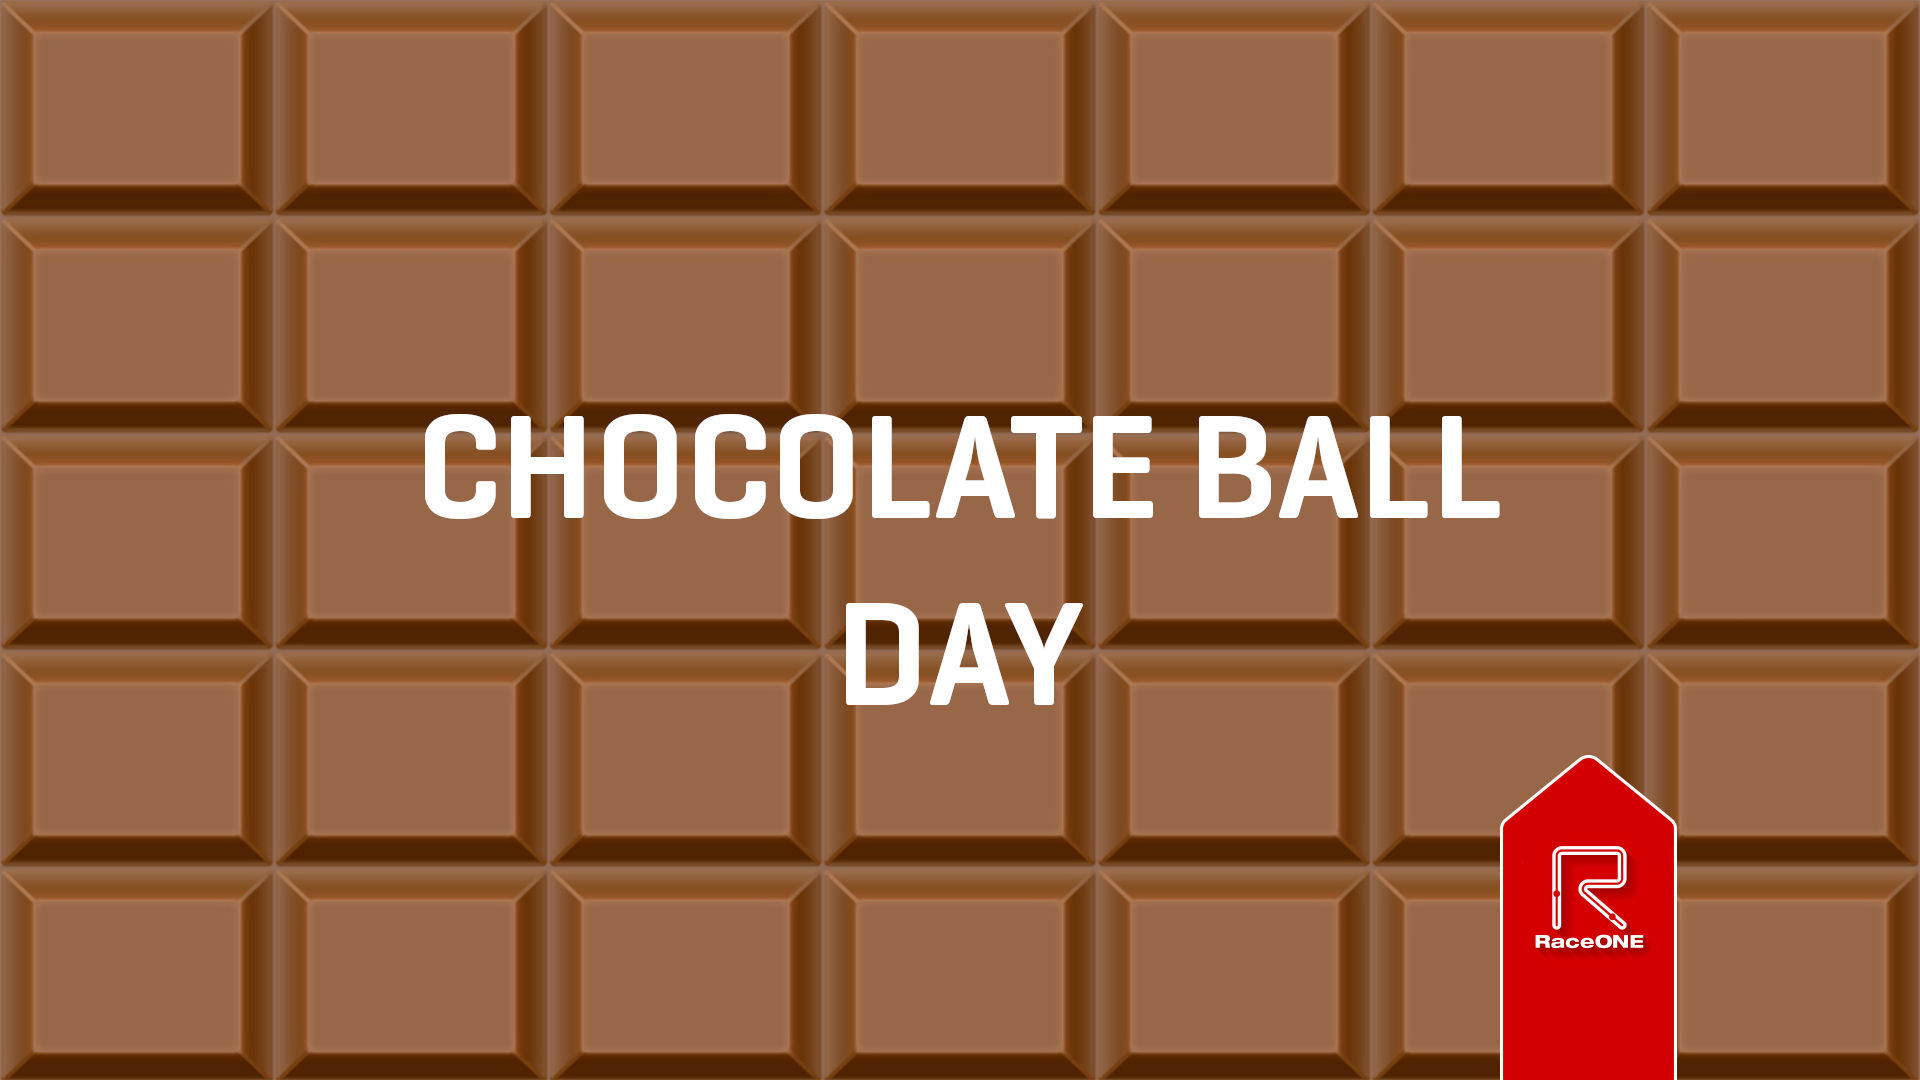 Chokladbollens Dag - 15 min